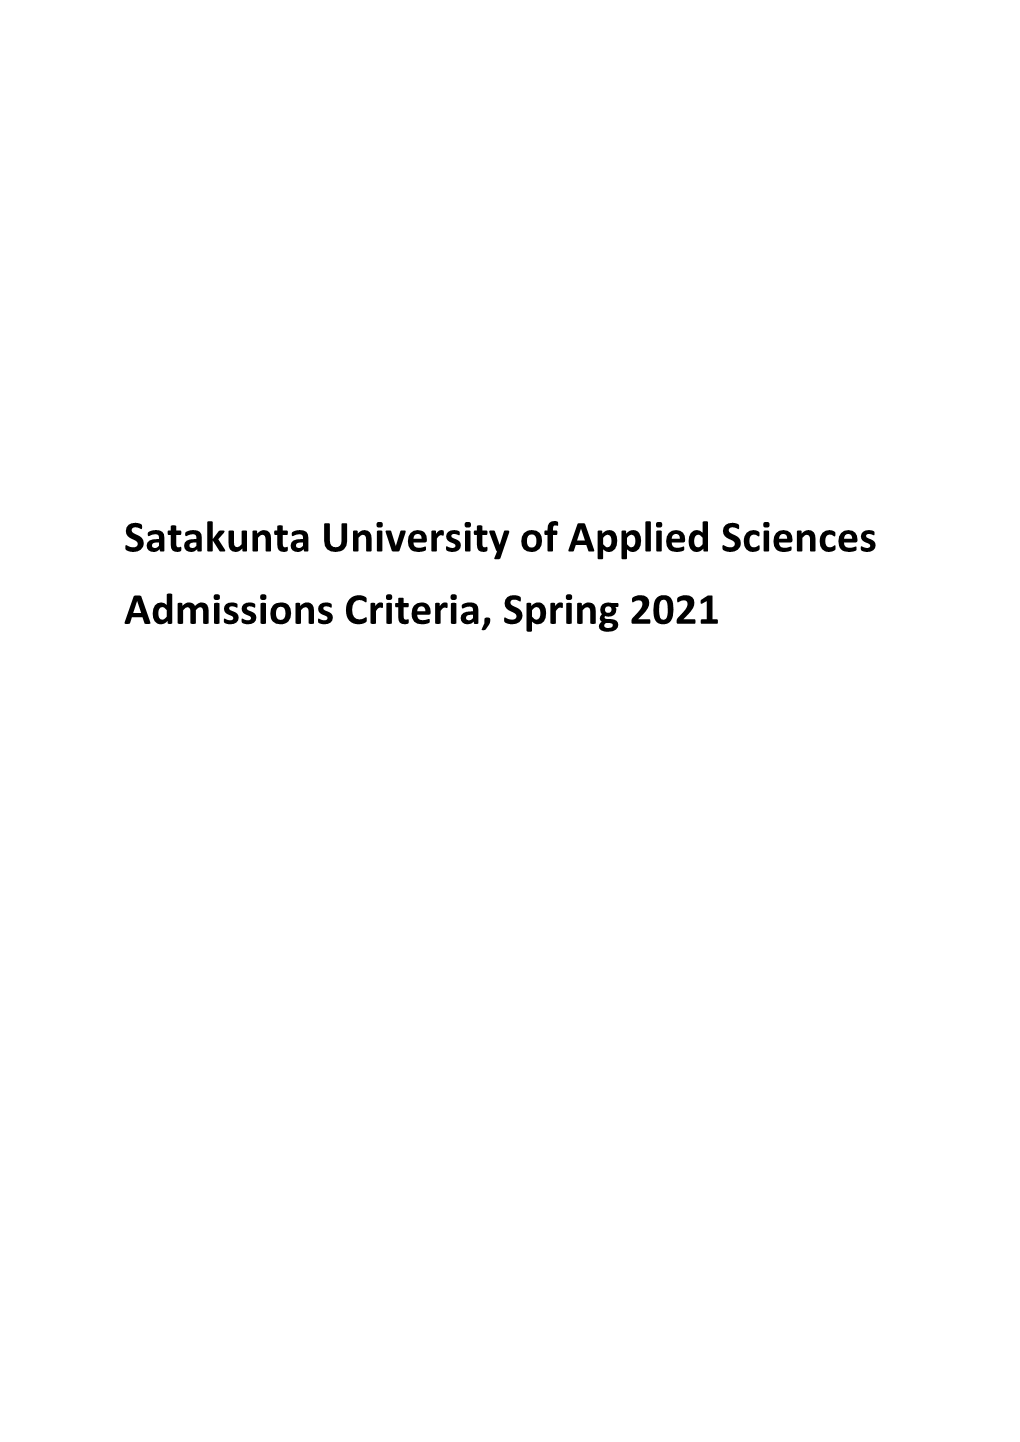 Admissions Criteria O Satakunta University Of